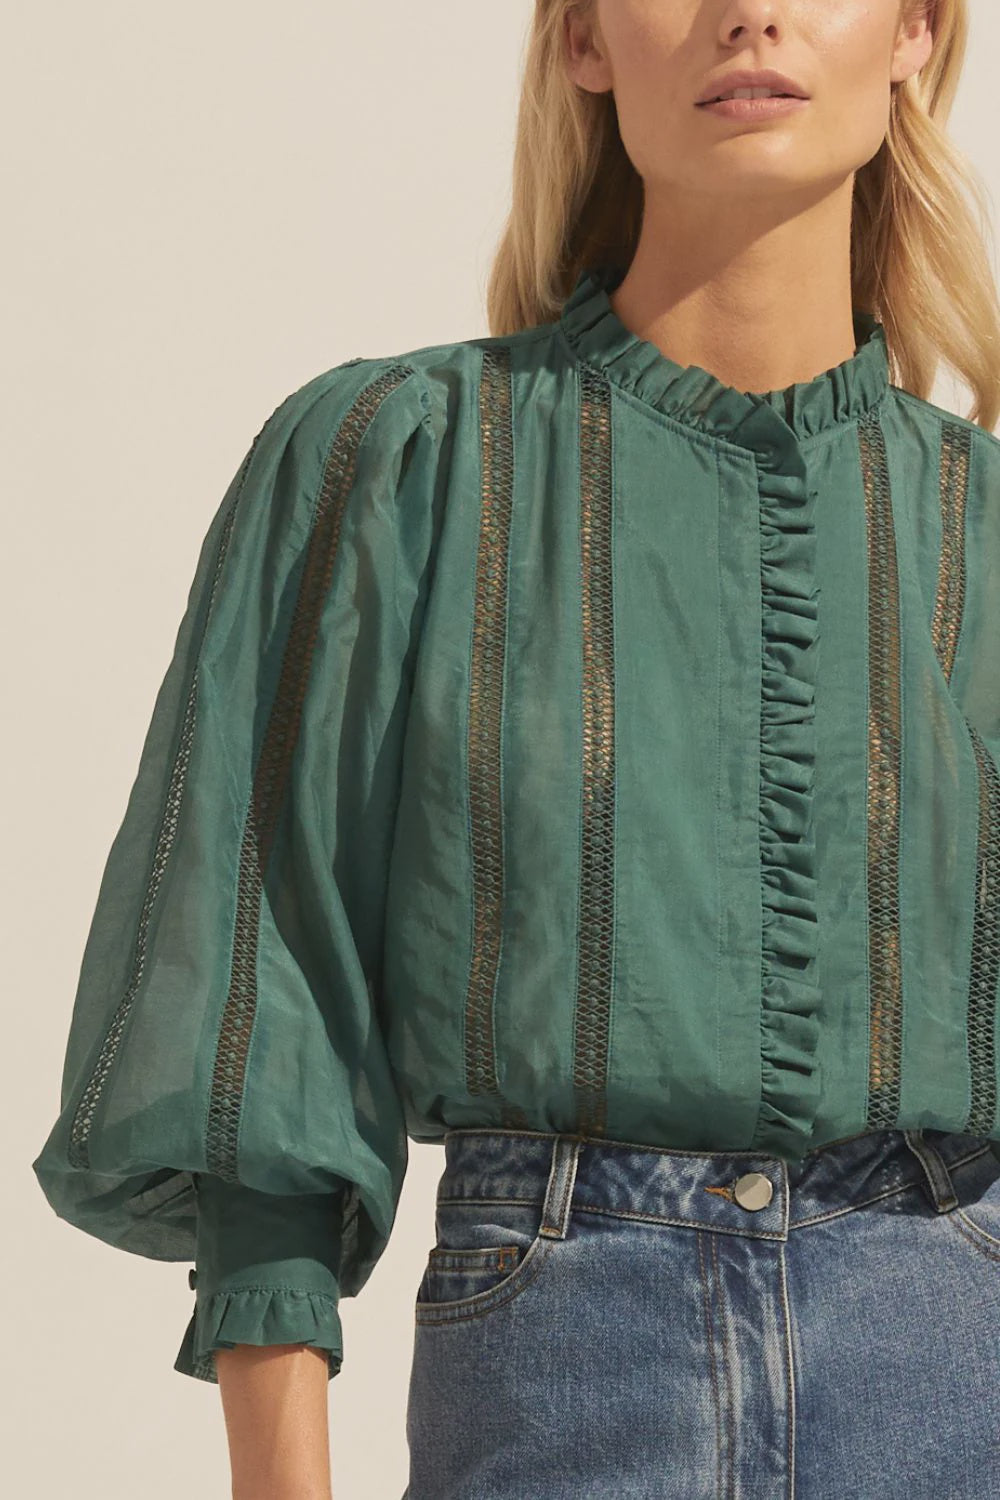 Swoon Top - Green blouse Zoe Kratzmann   